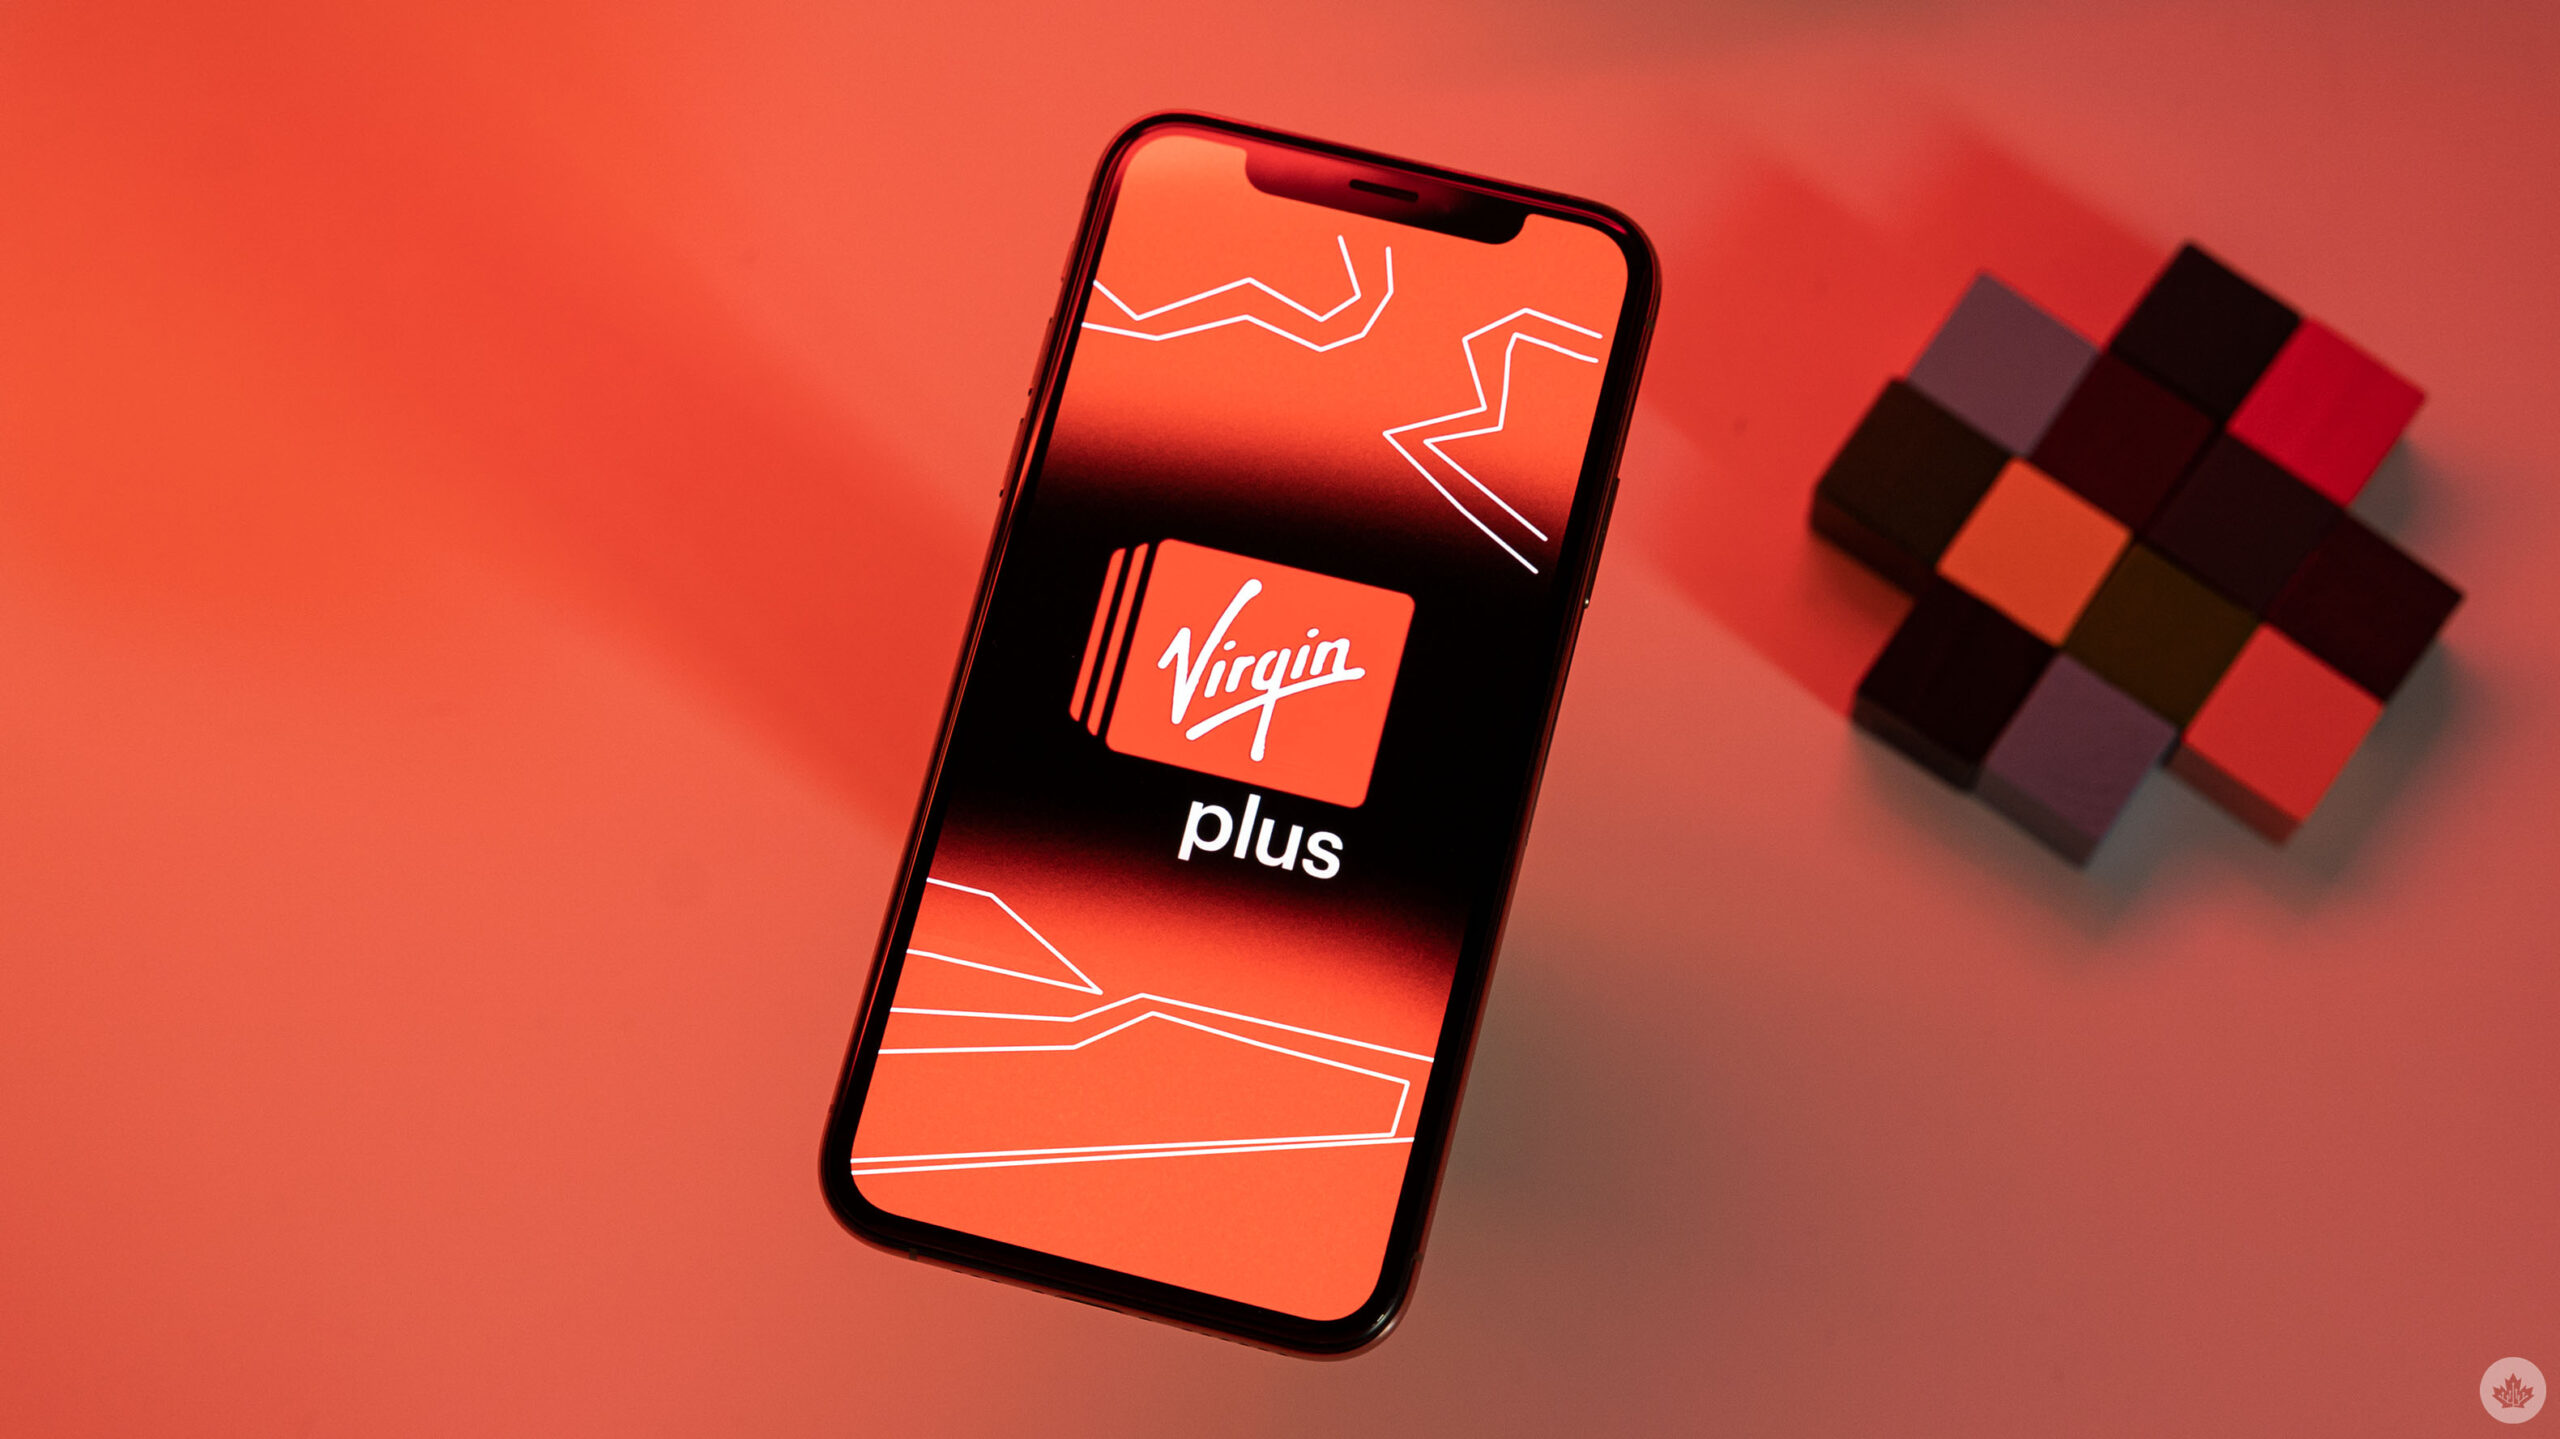 Virgin Plus rolls out /30GB plan, brings back /20GB offer